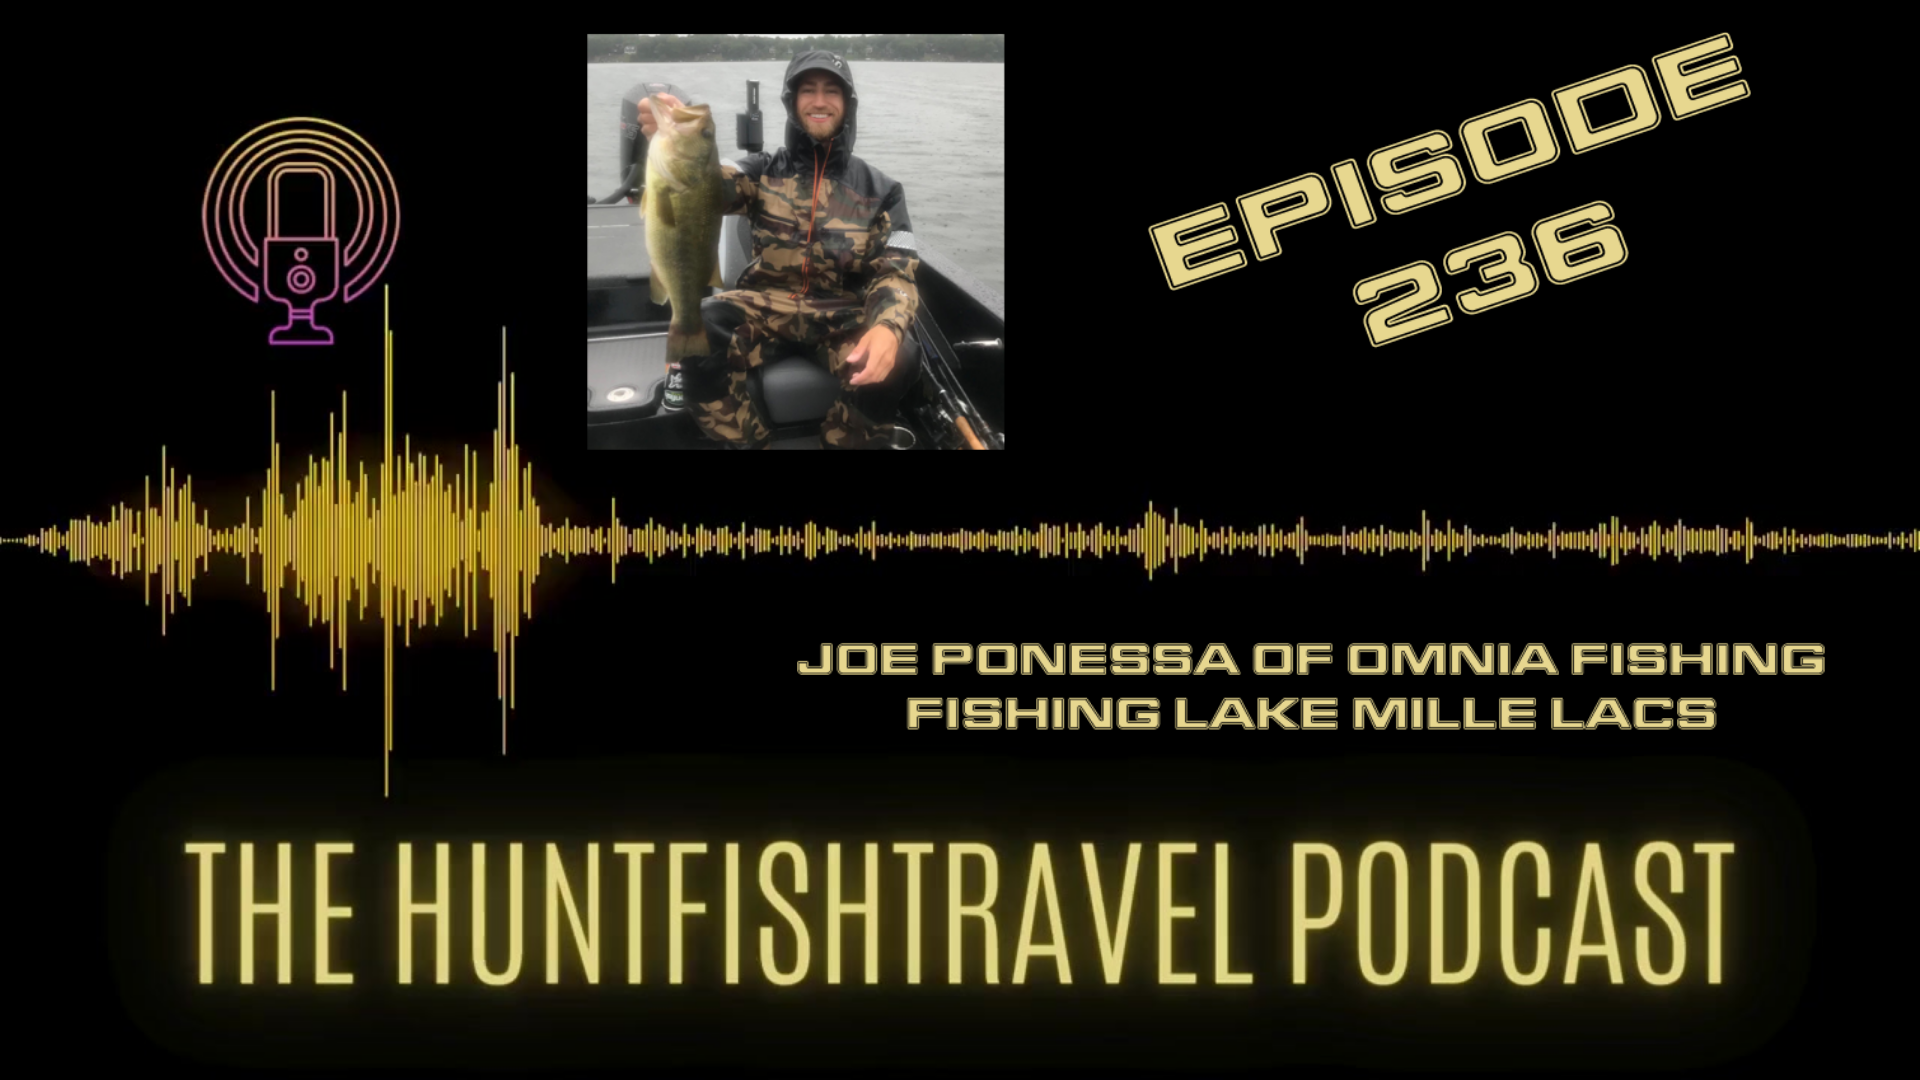 #HuntFishTravel Ep236 - Fishing Lake Mille Lacs with Joe Ponessa from Omnia Fishing